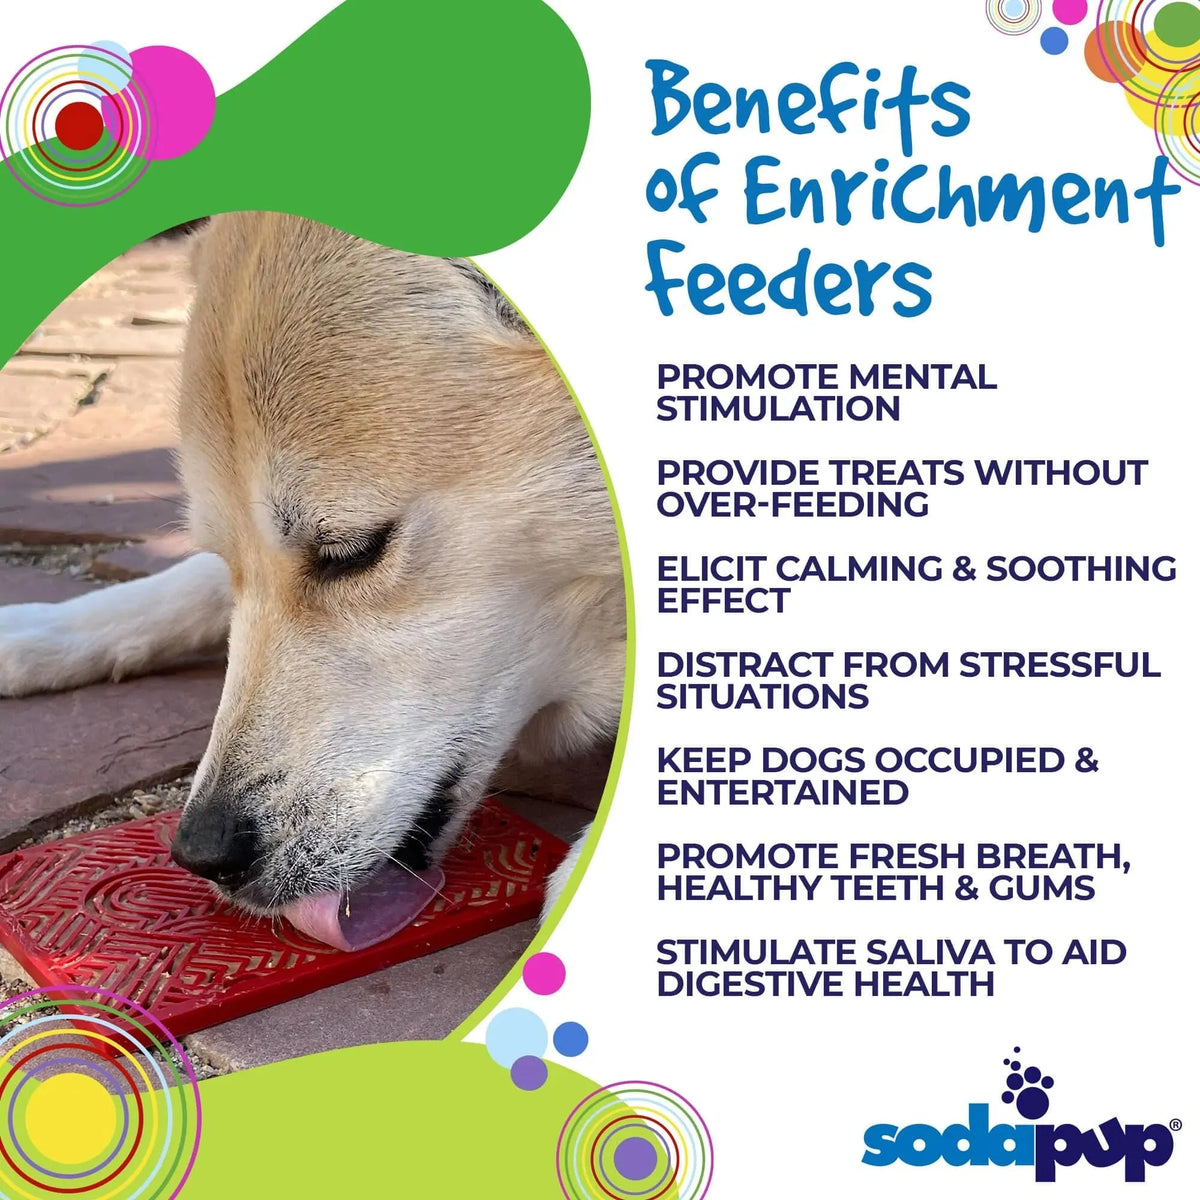 SodaPup/True Dogs, LLC Heart Design &quot;Love&quot; eMat Enrichment Lick Mat by SodaPup/True Dogs, LLC